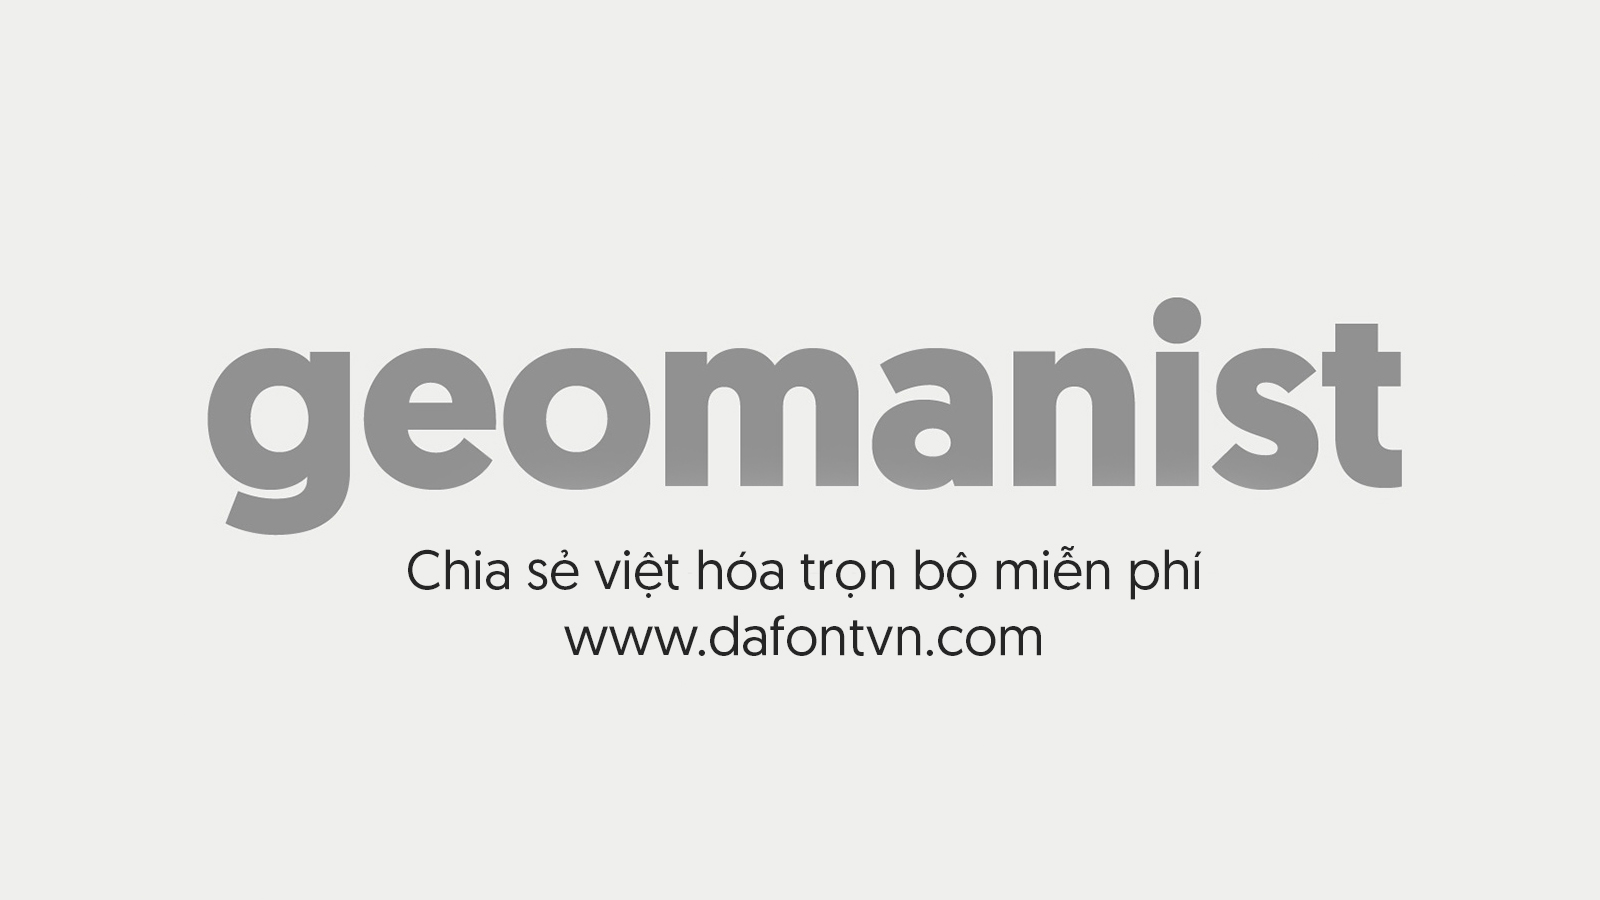 Font Geomanist Việt hóa